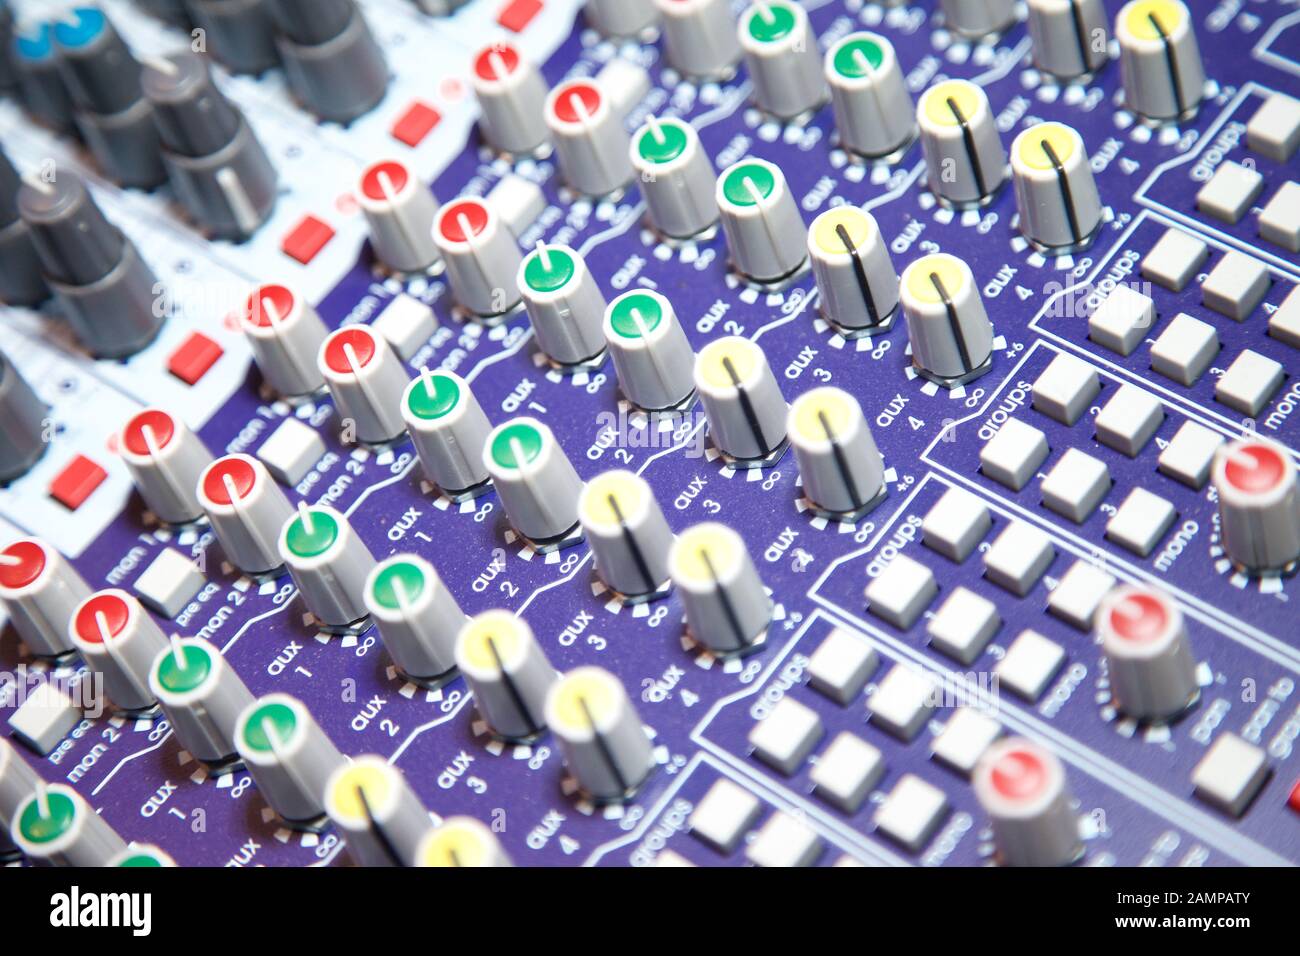 Cierre de los mandos e interruptores de una consola de mezcla de audio. Foto de stock